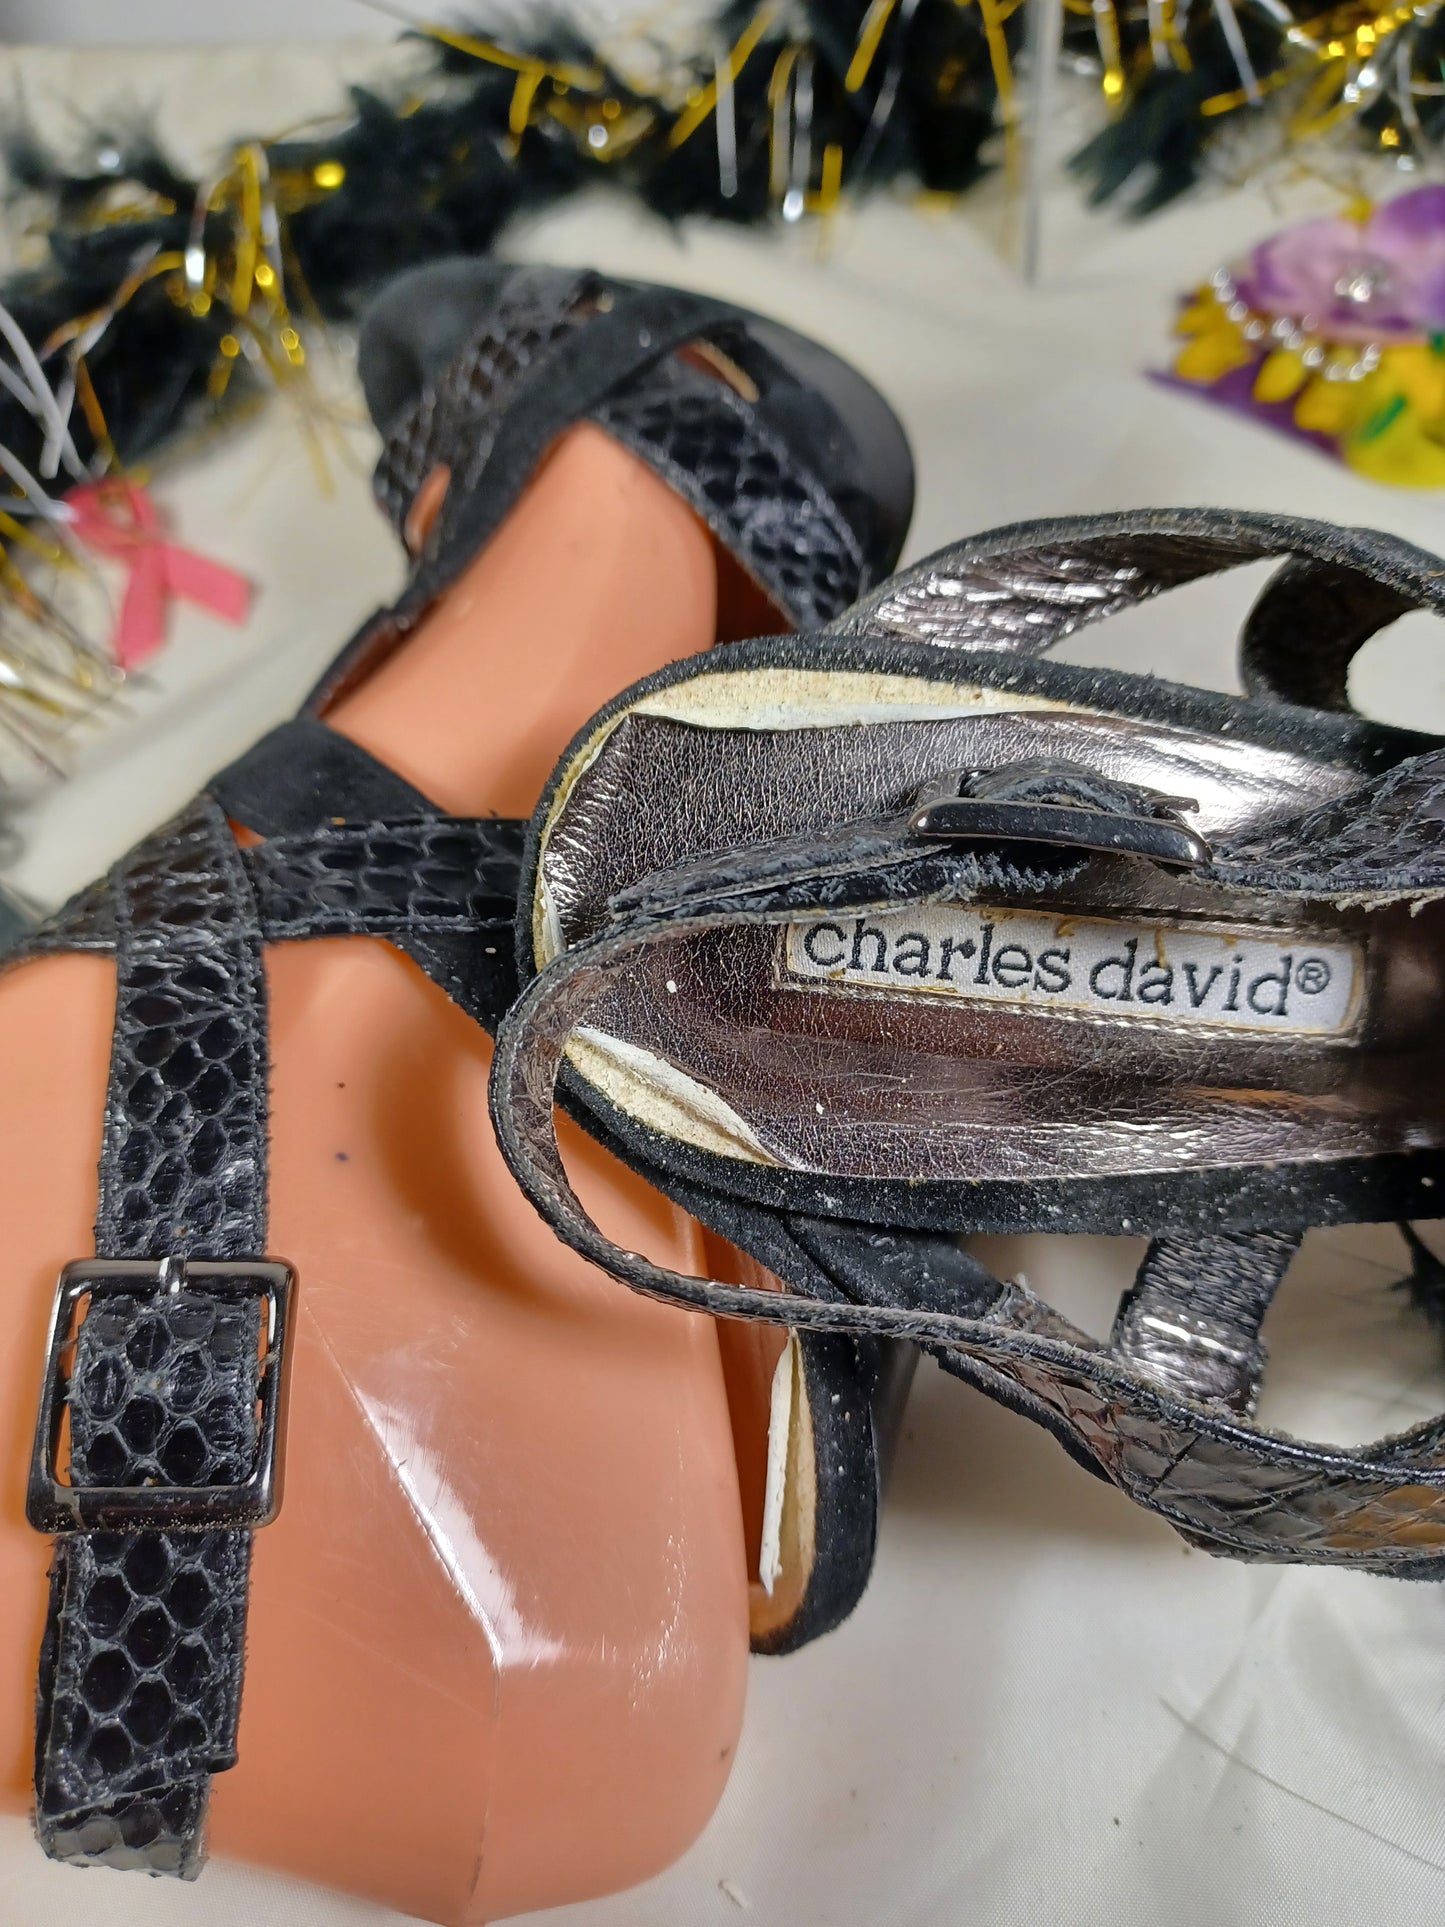 CHARLES DAVID SUEDE LEATHER BLACK ANIMAL PRINT CROSS-STRAP PEEP-TOE CASUAL DRESS SANDAL, SZ 7M